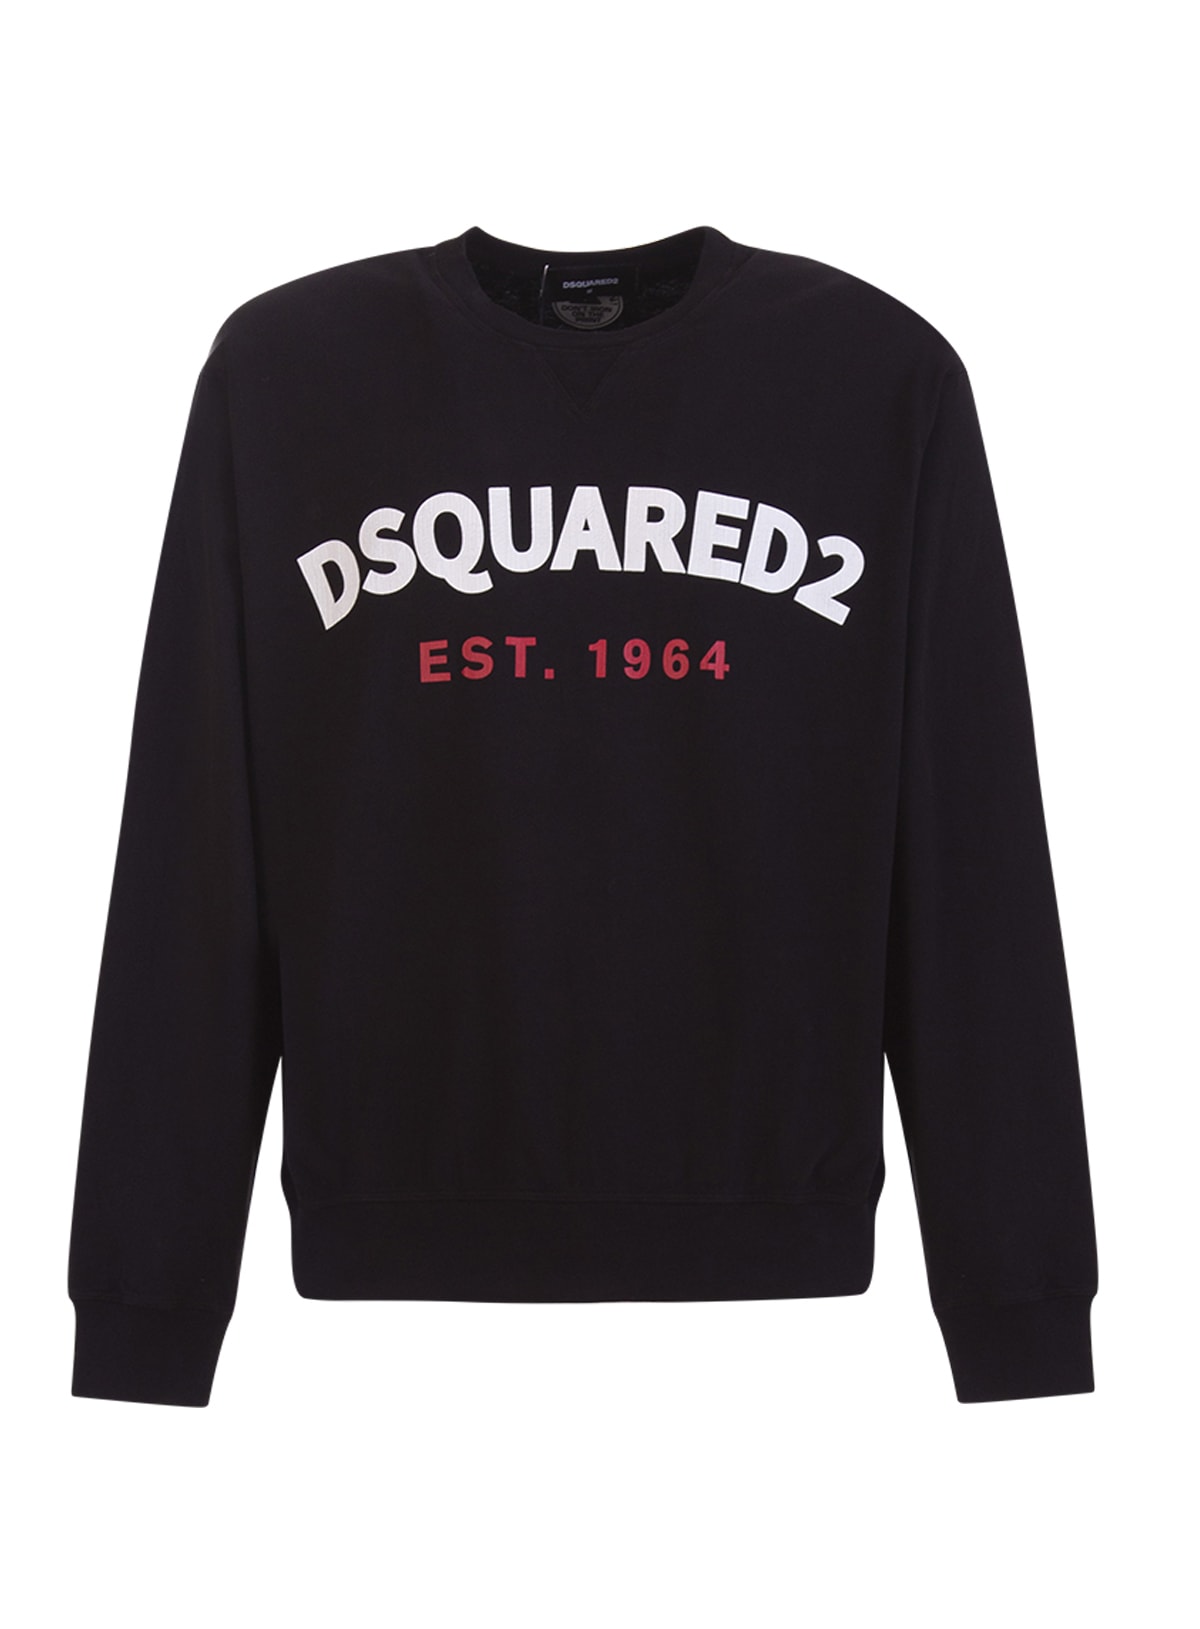 Dsquared2 Est. 1964 Sweatshirt